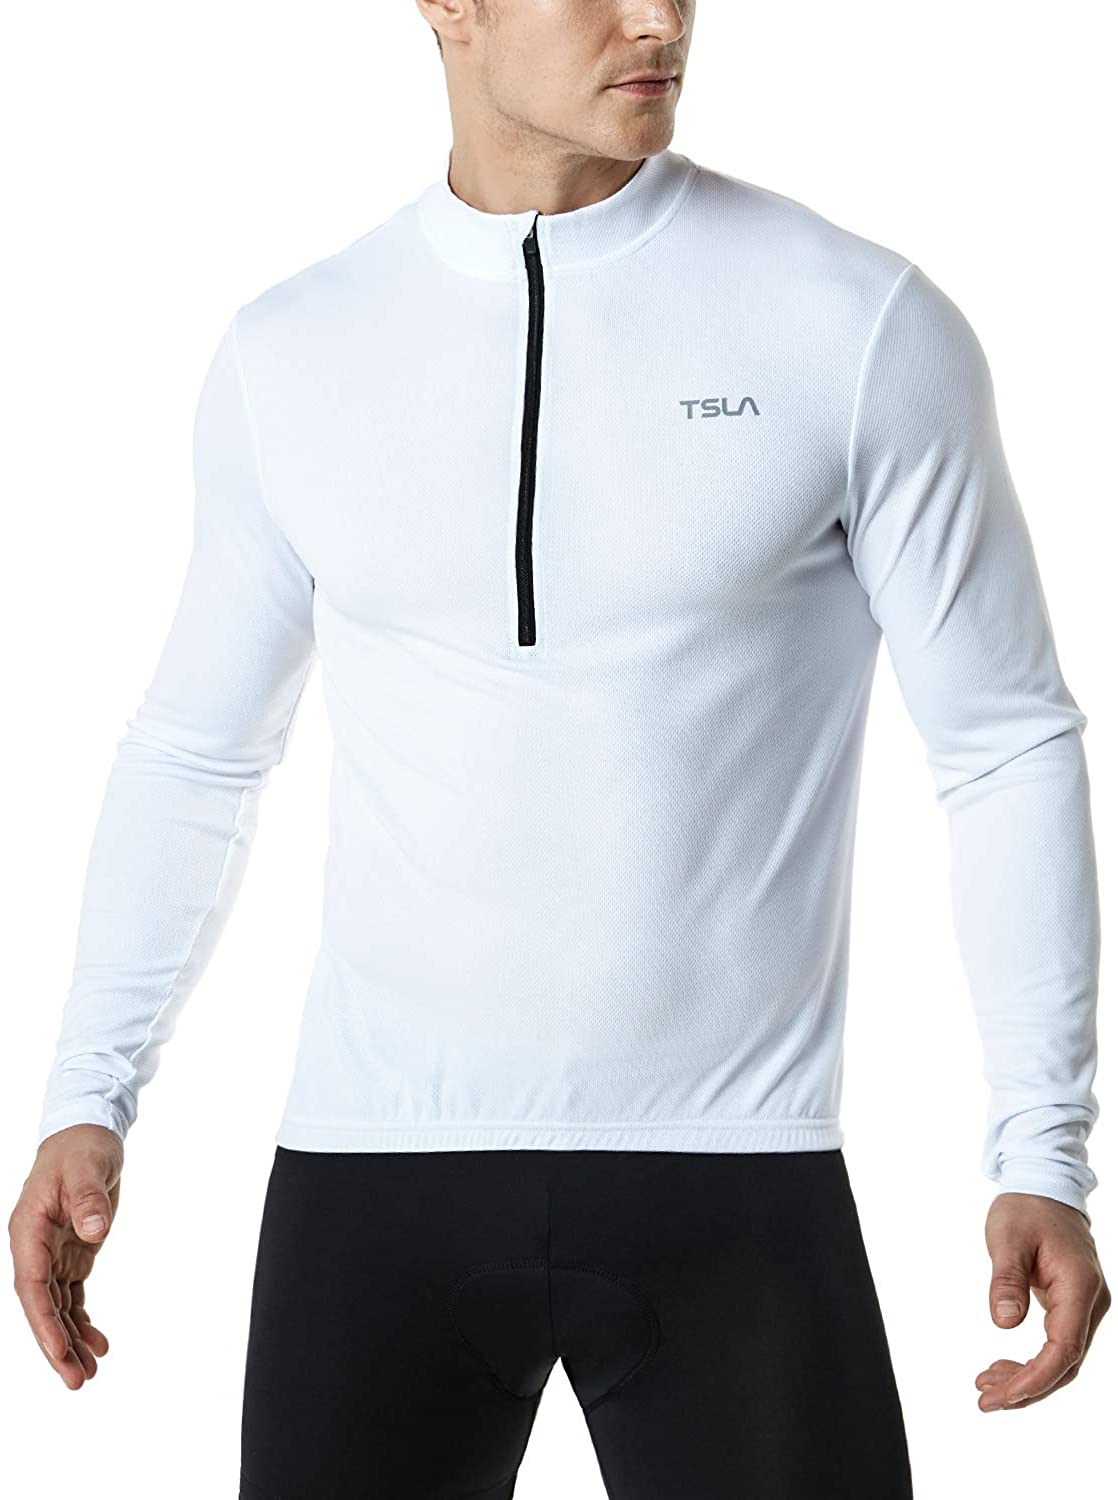 TSLA Mens Long Sleeve Bike Cycling Jersey Quick Dry Breathable Reflective Biking Shirts with 3 Rear Pockets 